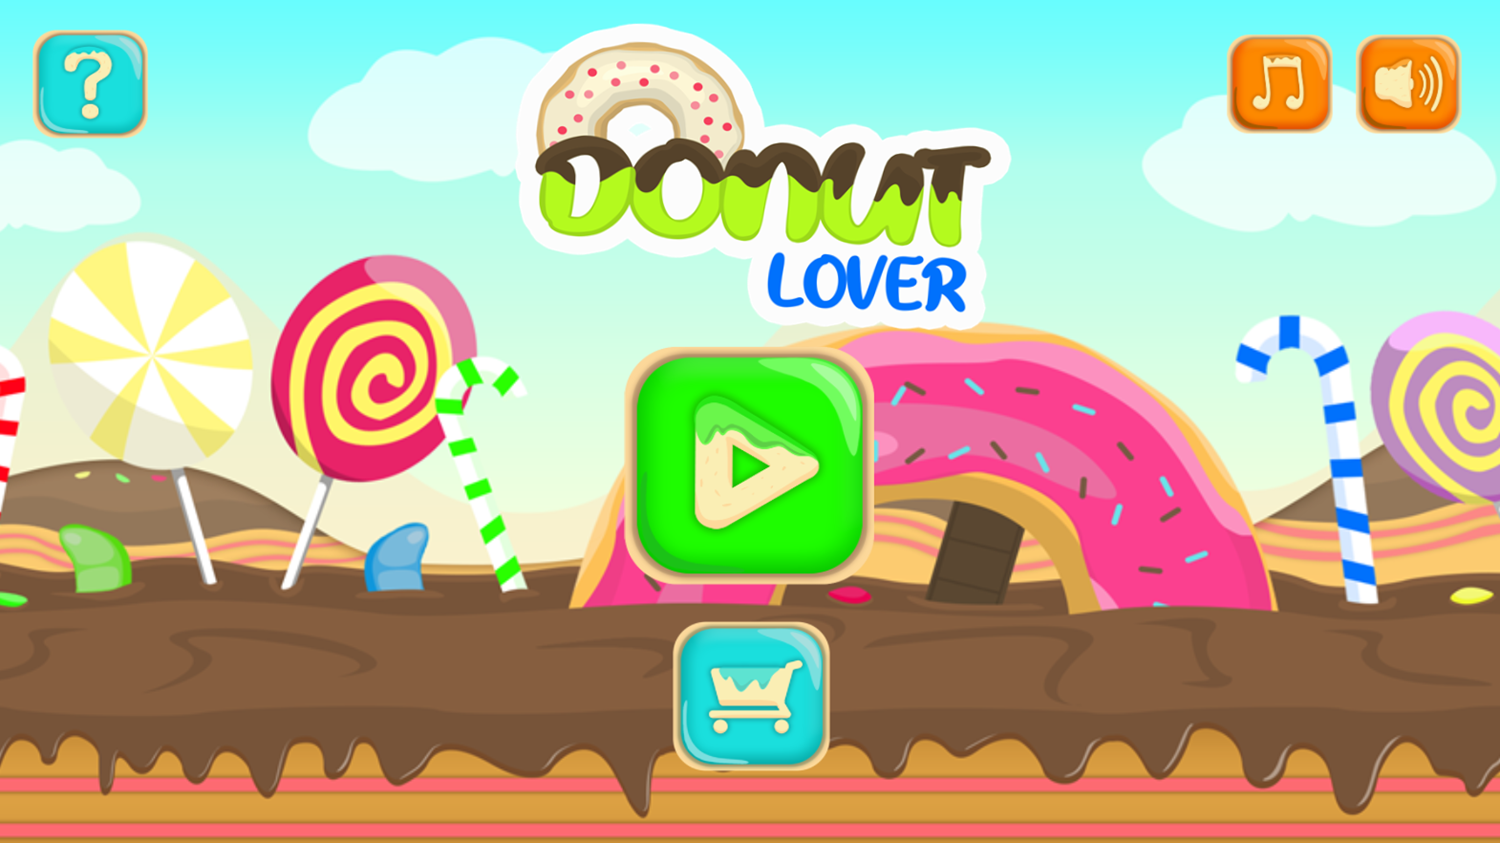 Donut Lover 2 Game Welcome Screen Screenshot.